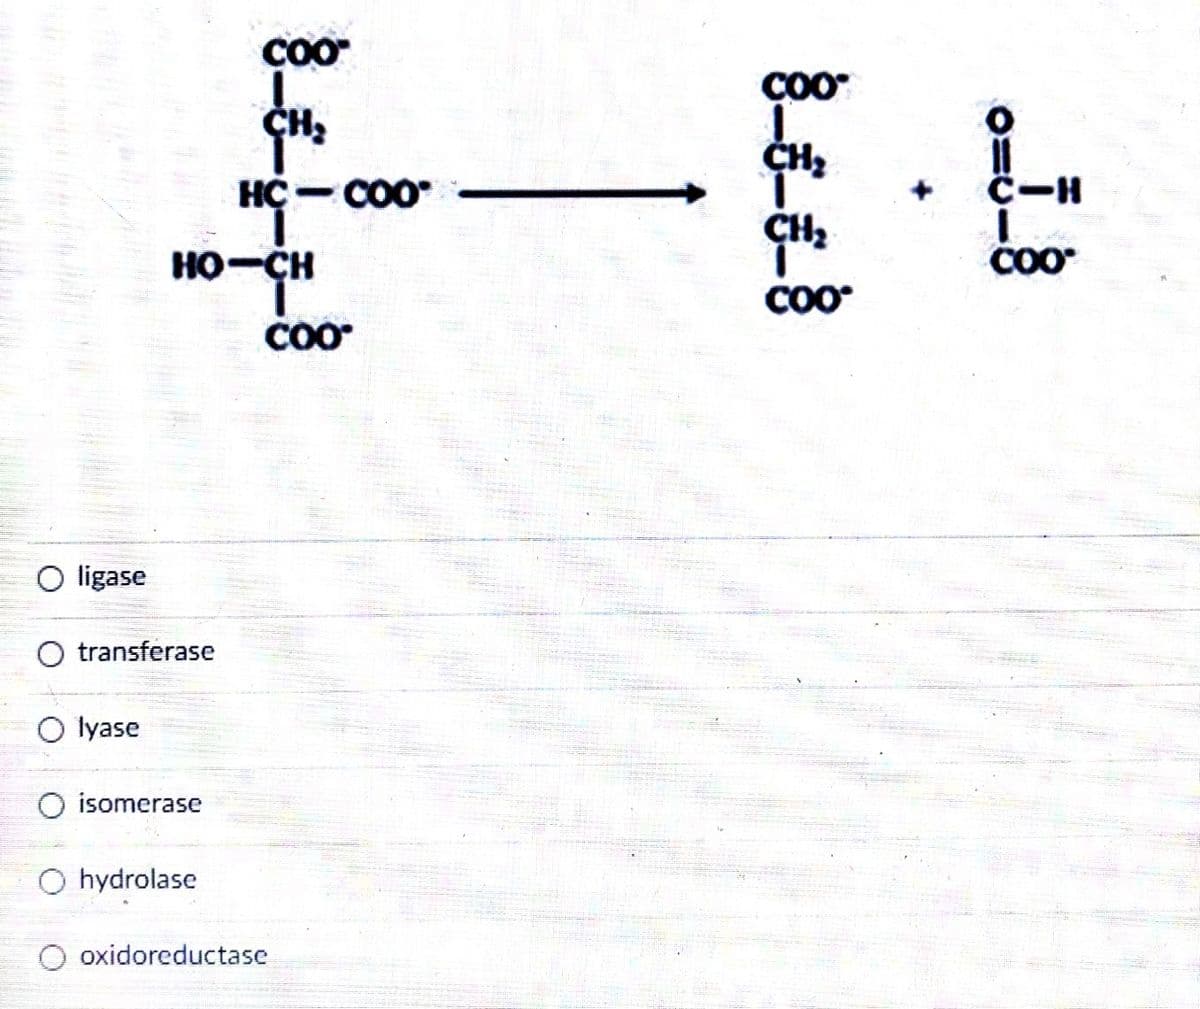 COO
HC- CO0
C-H
HO-CH
COO
CO0
O ligase
O transferase
O lyase
O isomerase
O hydrolase
oxidoreductase
